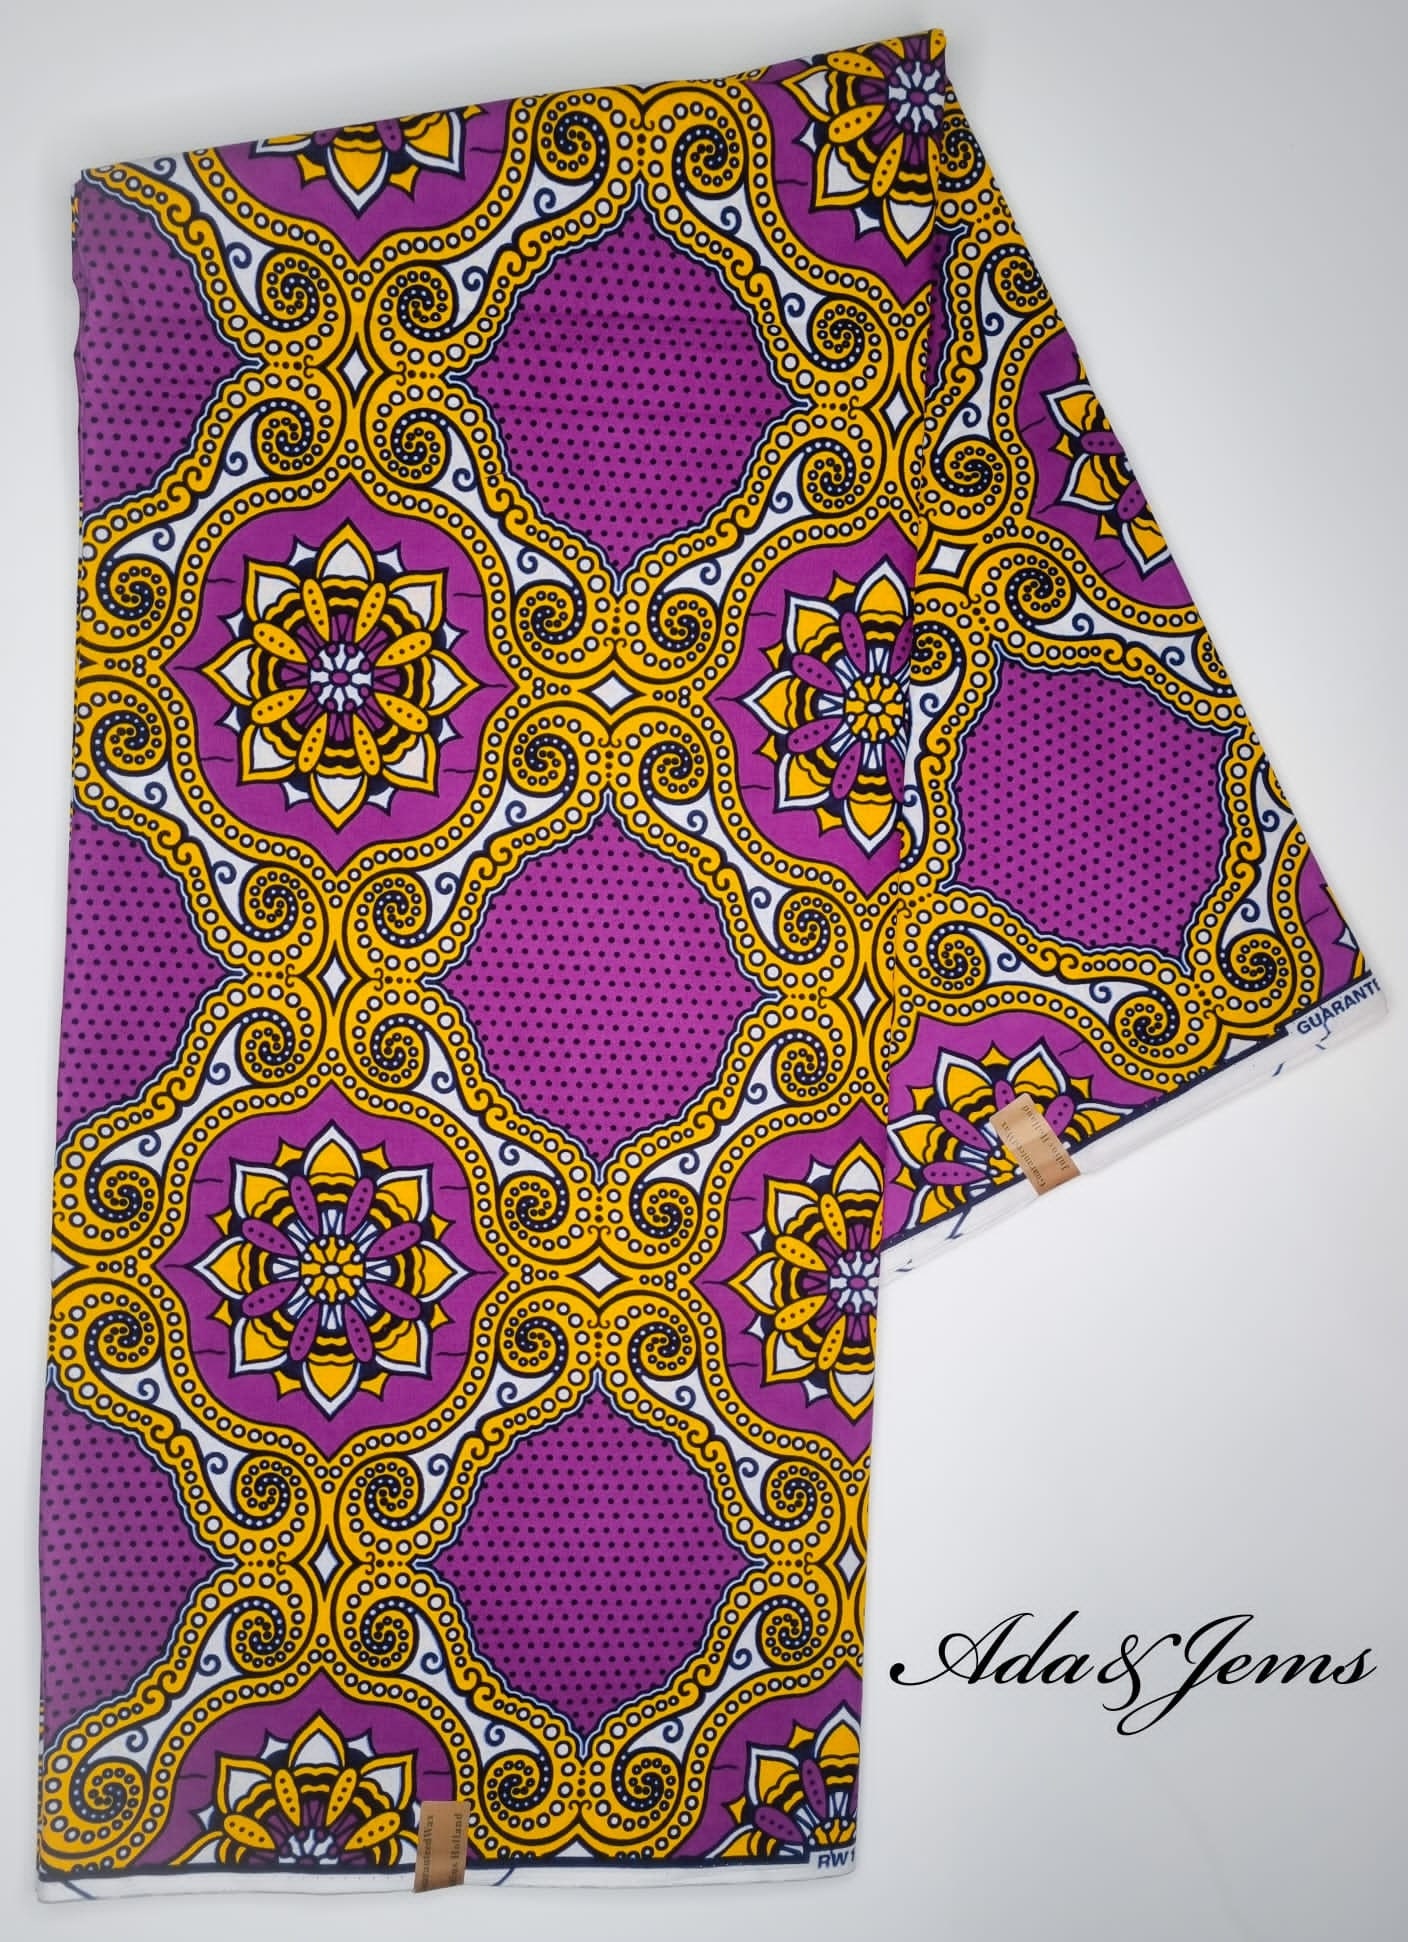 Boho Fabric by the Yard, African Ankara Print, Geometric, Cotton Clothing  Sewing, Quilting, Bohemian Home Decor, DIY Crafting, Mask Headwrap 